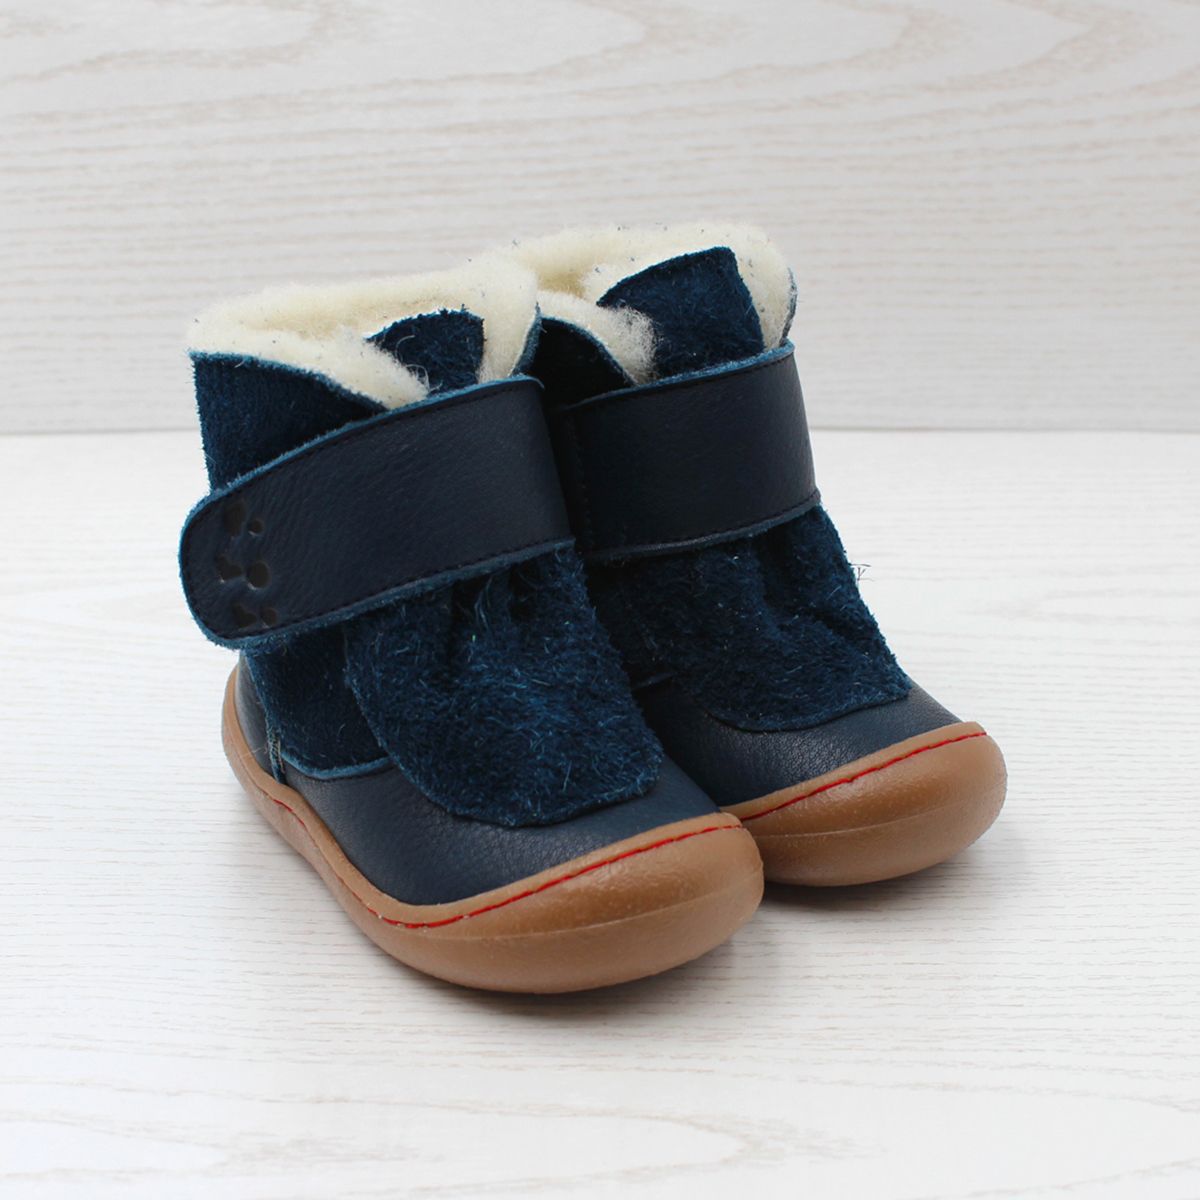 Ghete iarna barefoot cu lana pentru bebelusi si copii Pololo Karla, Albastru